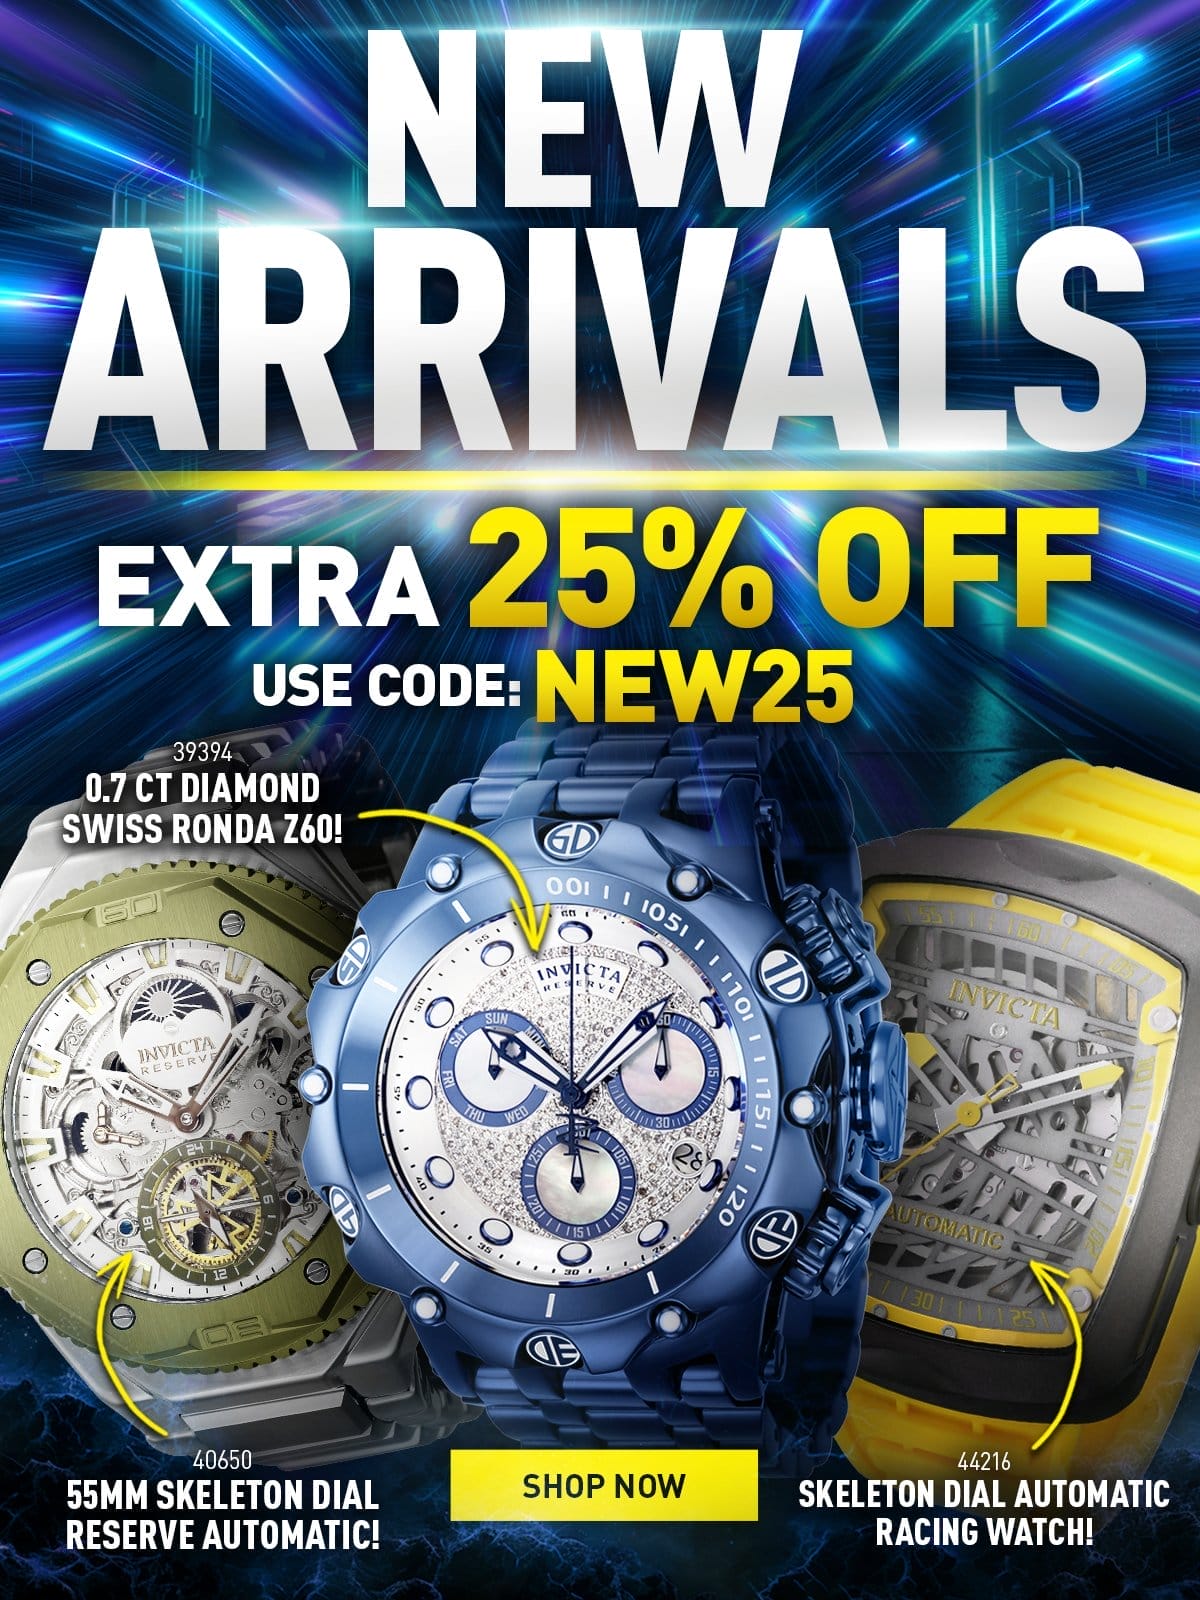 New Arrivals - Extra 25% off